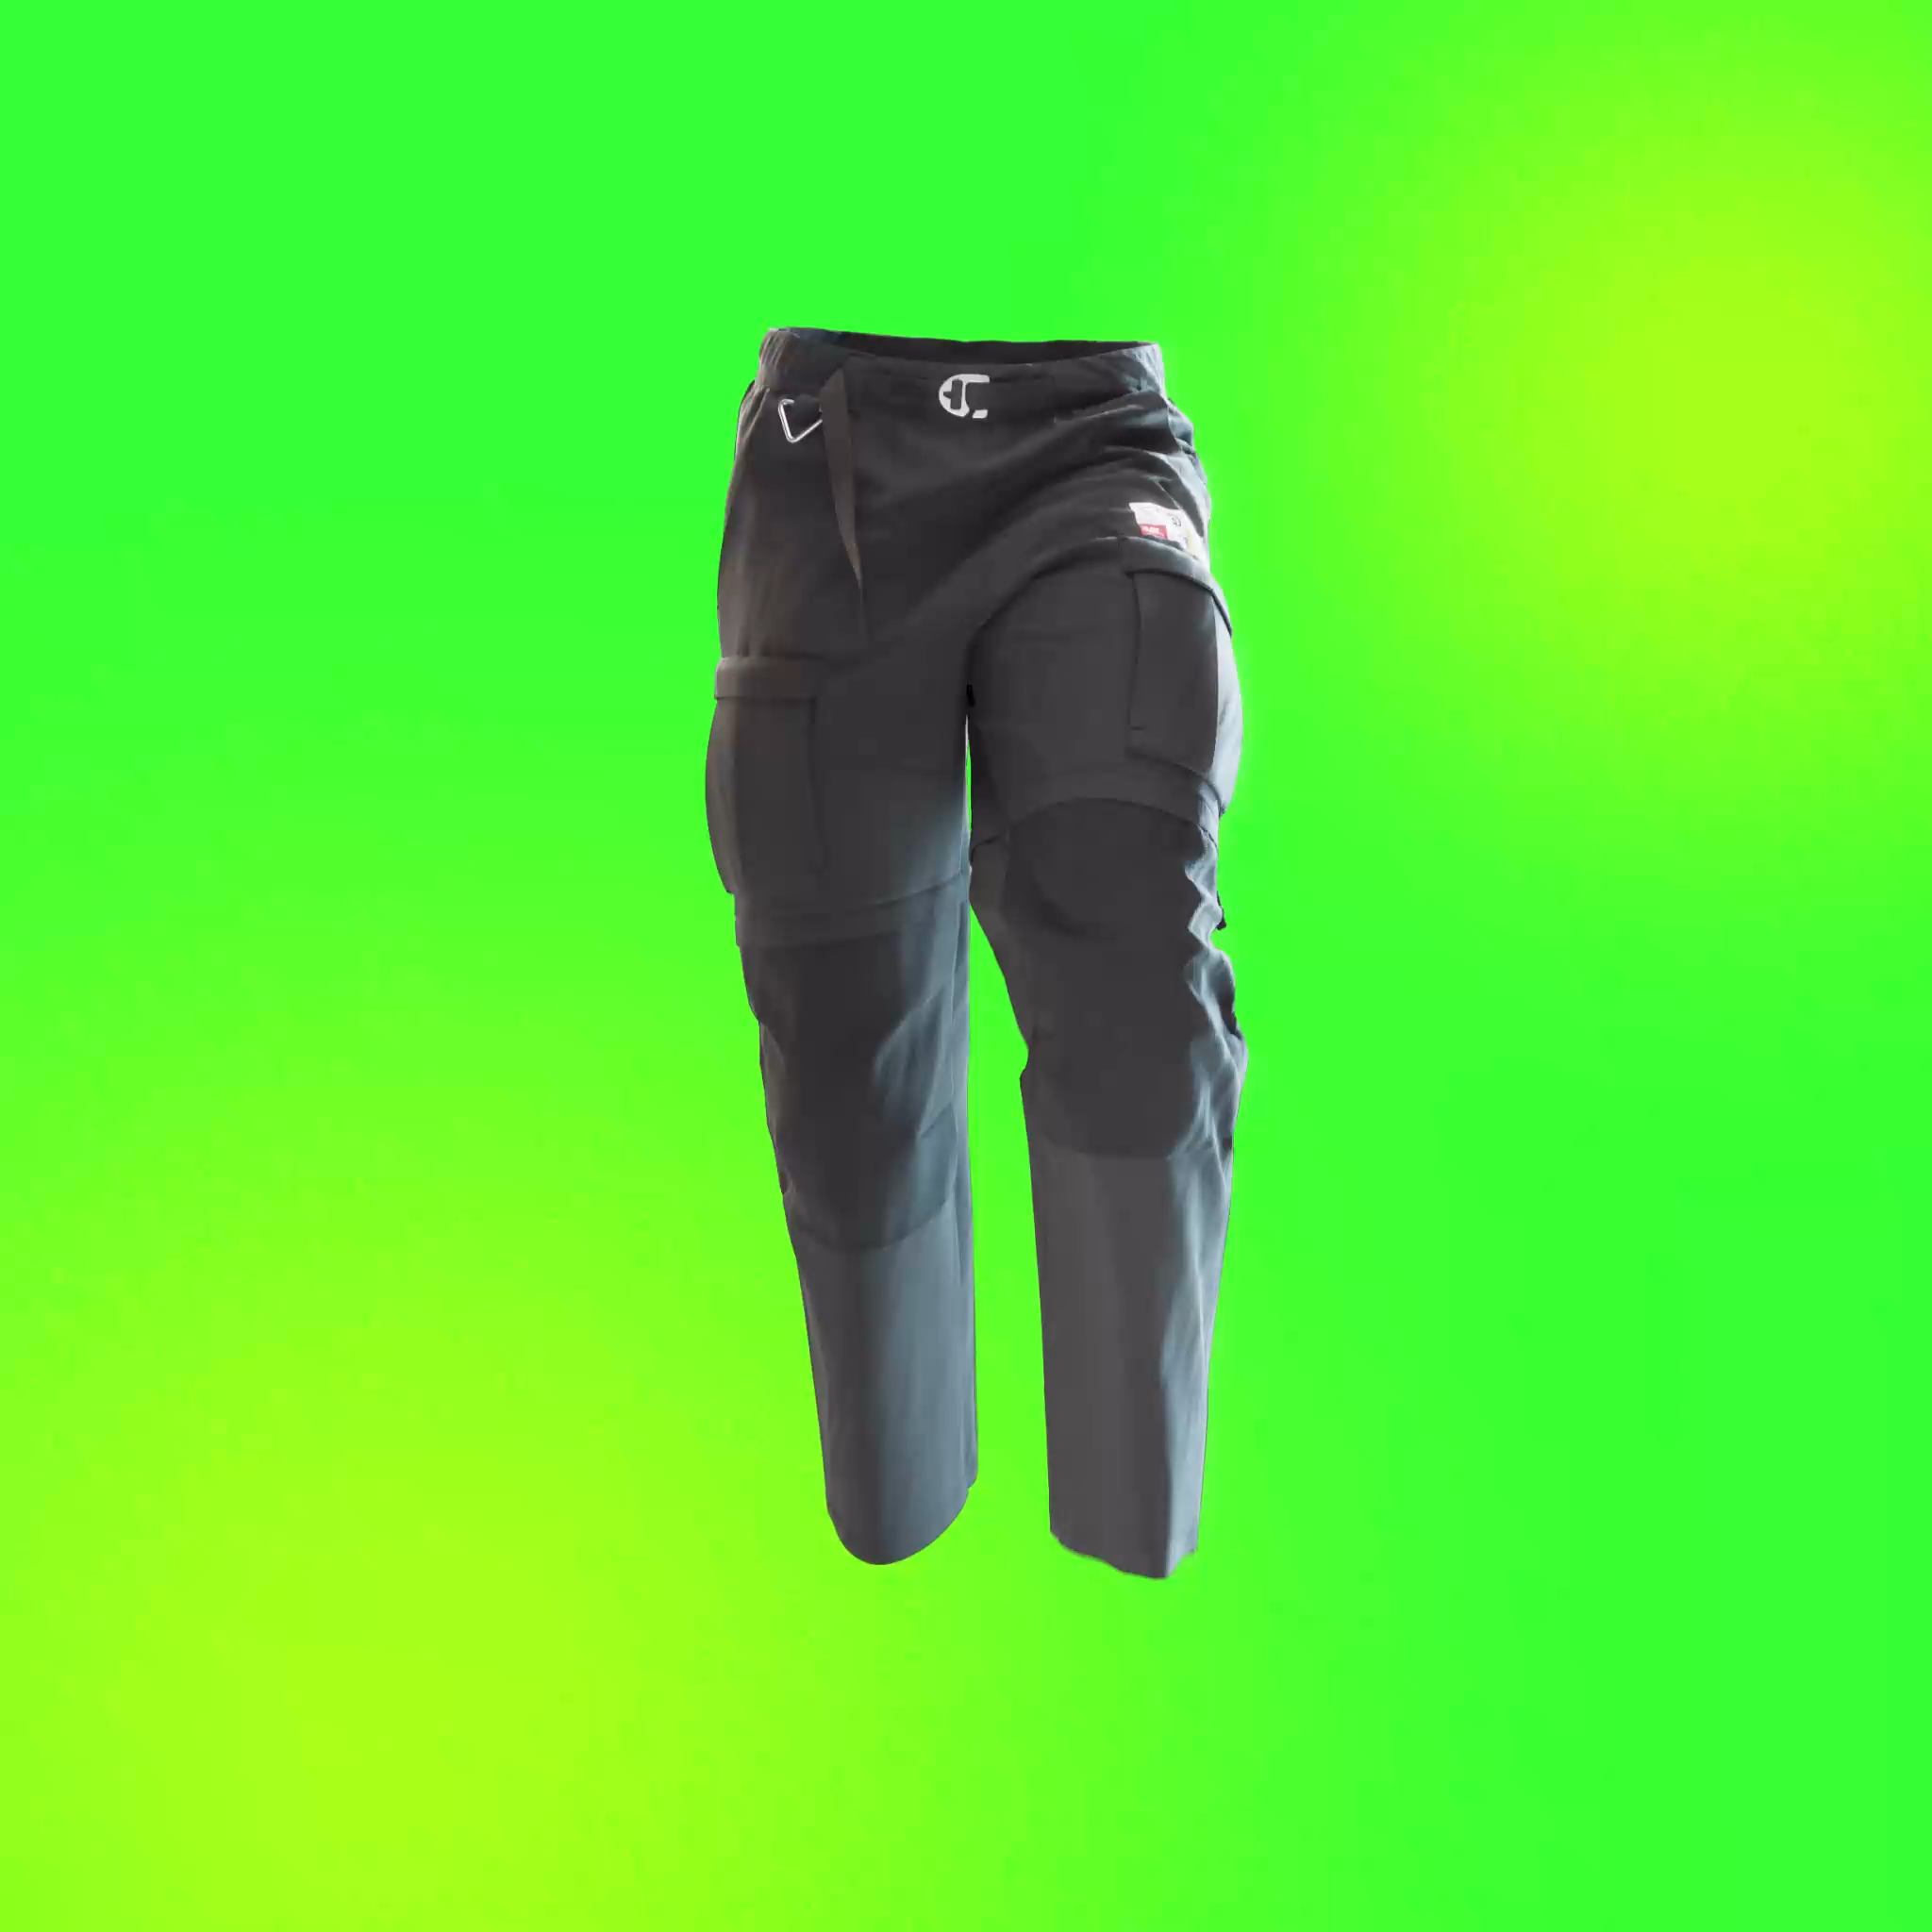 Alien Pants 👽